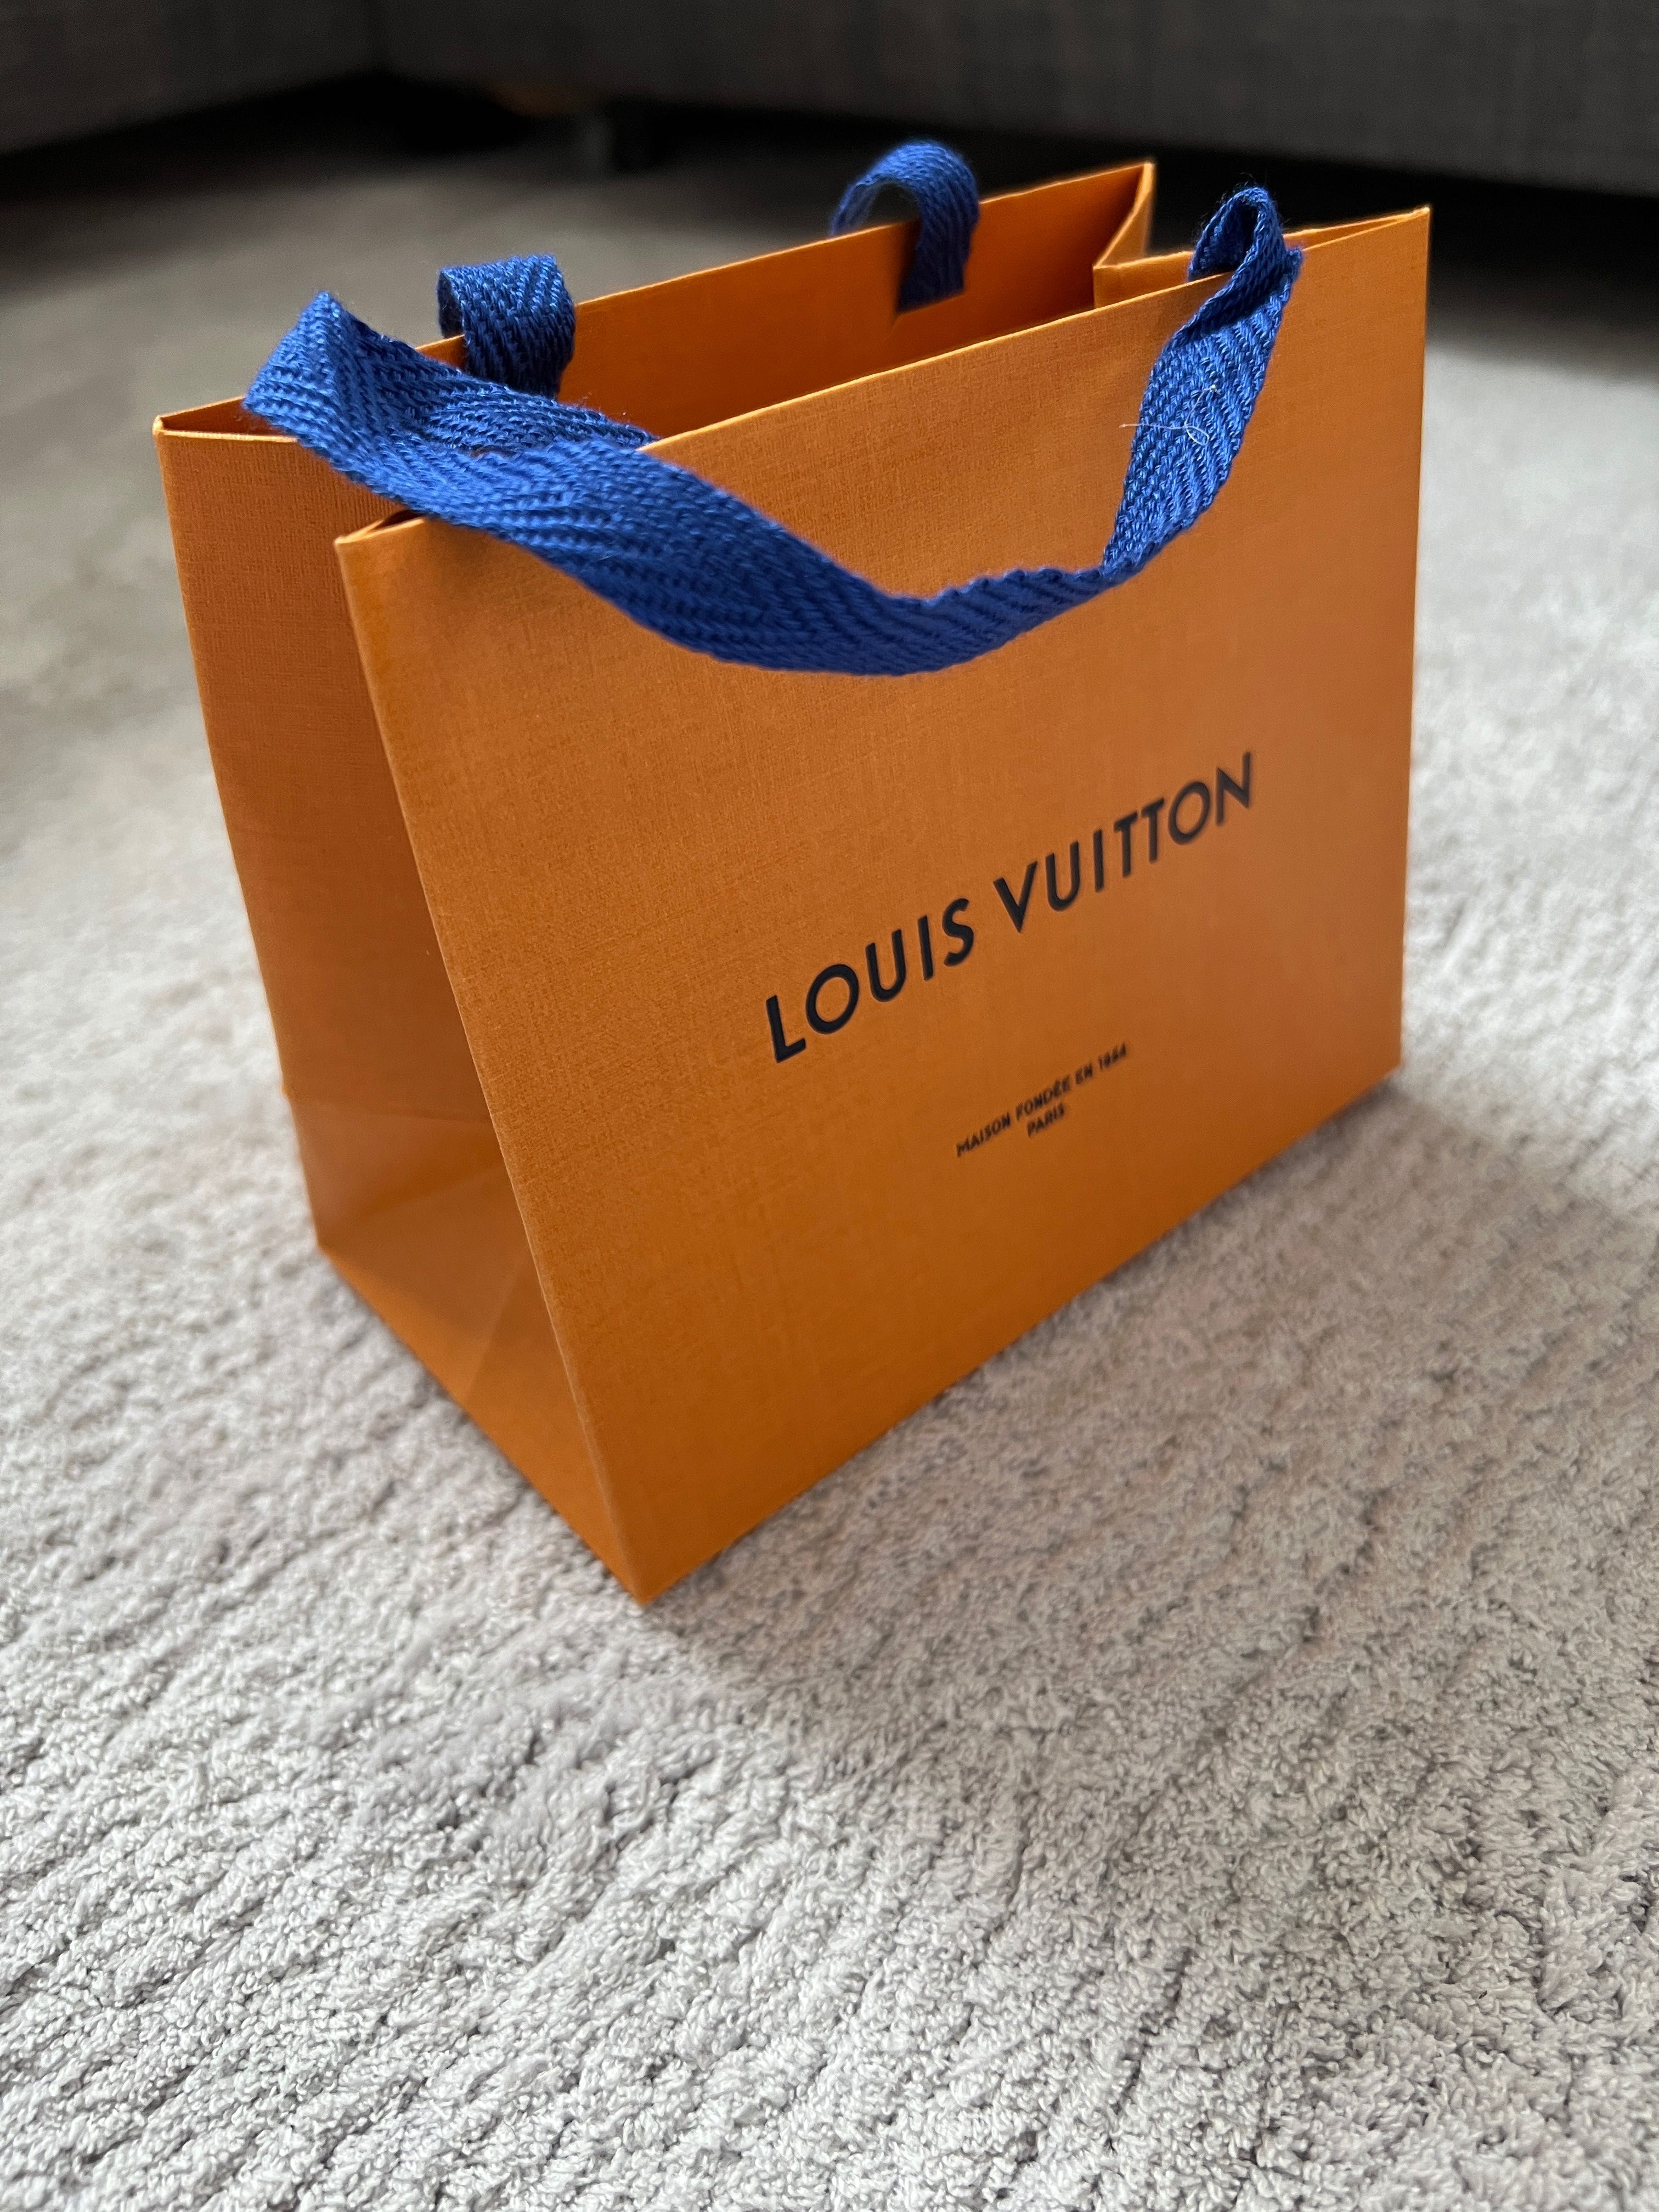 LOUIS Vuitton torba papierowa po zakupach prezentowa